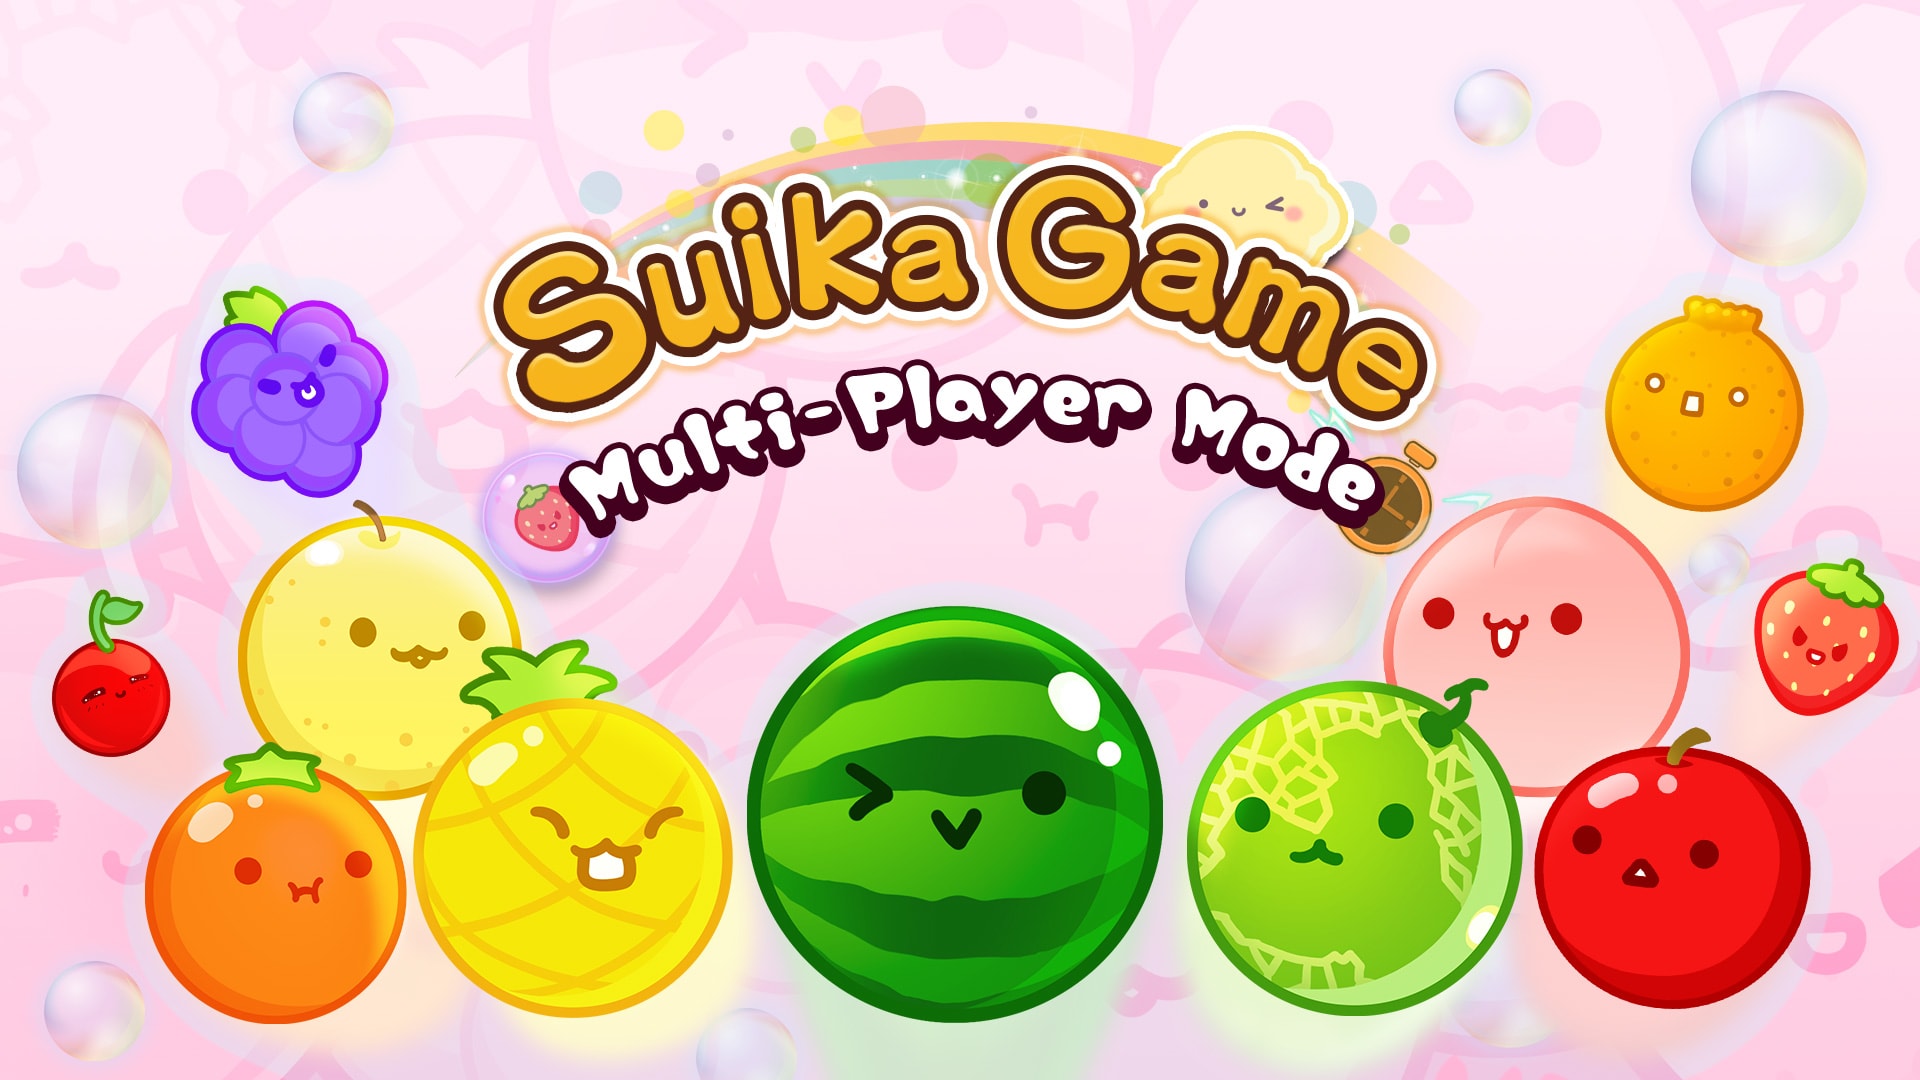 Suika Game Multi-Player Mode Expansion Pack